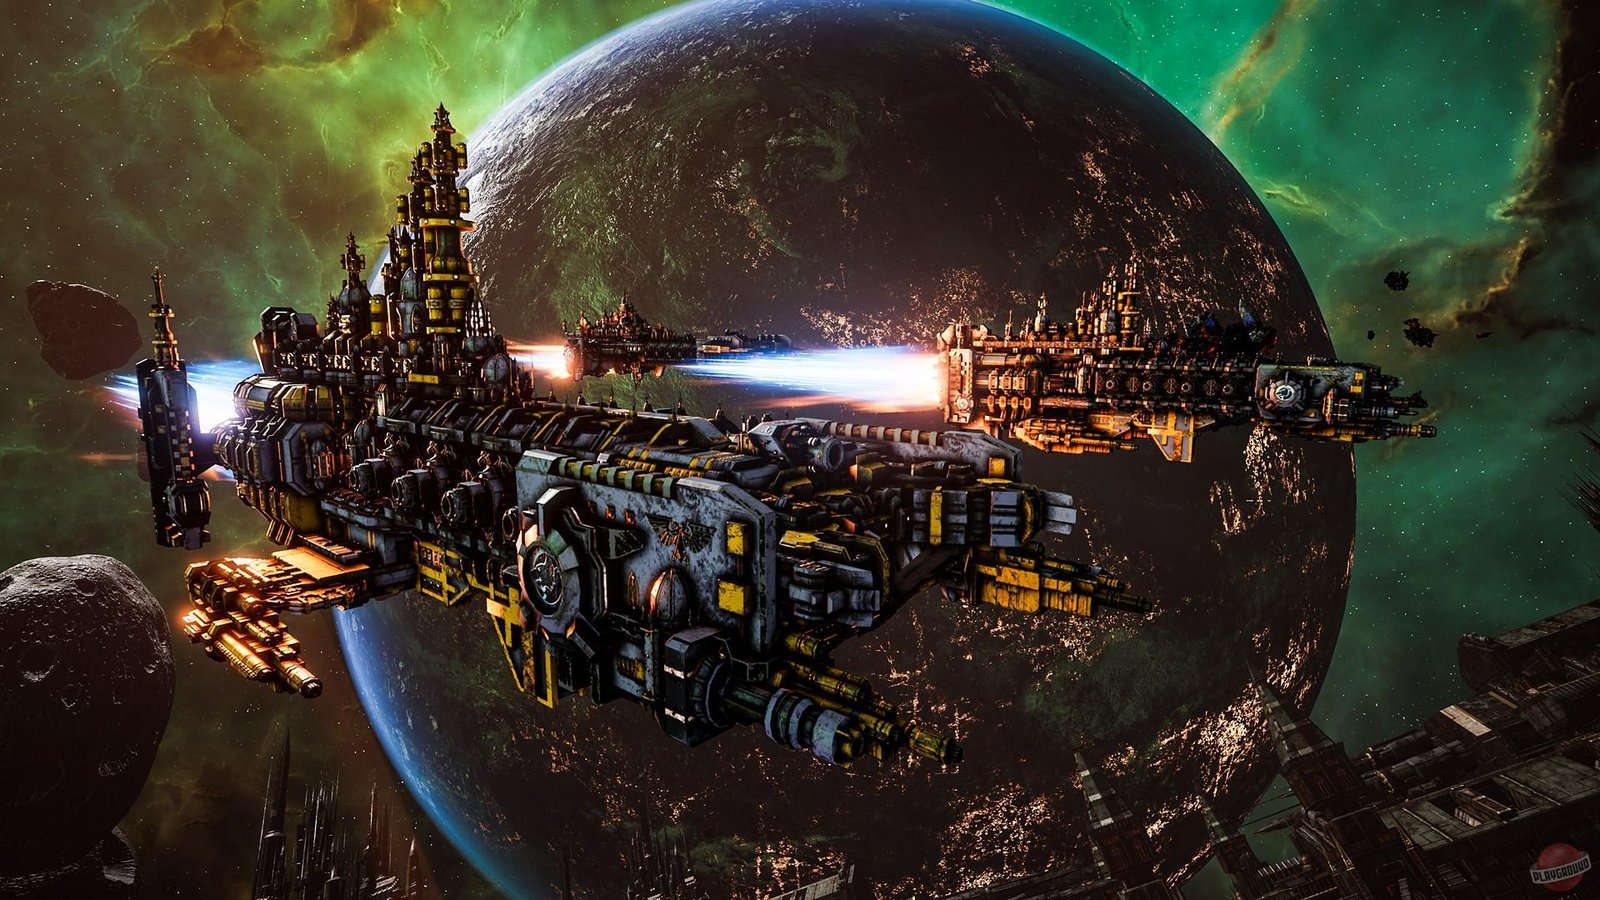 Battlefleet Gothic: Armada 2 - Chaos Campaign Expansion